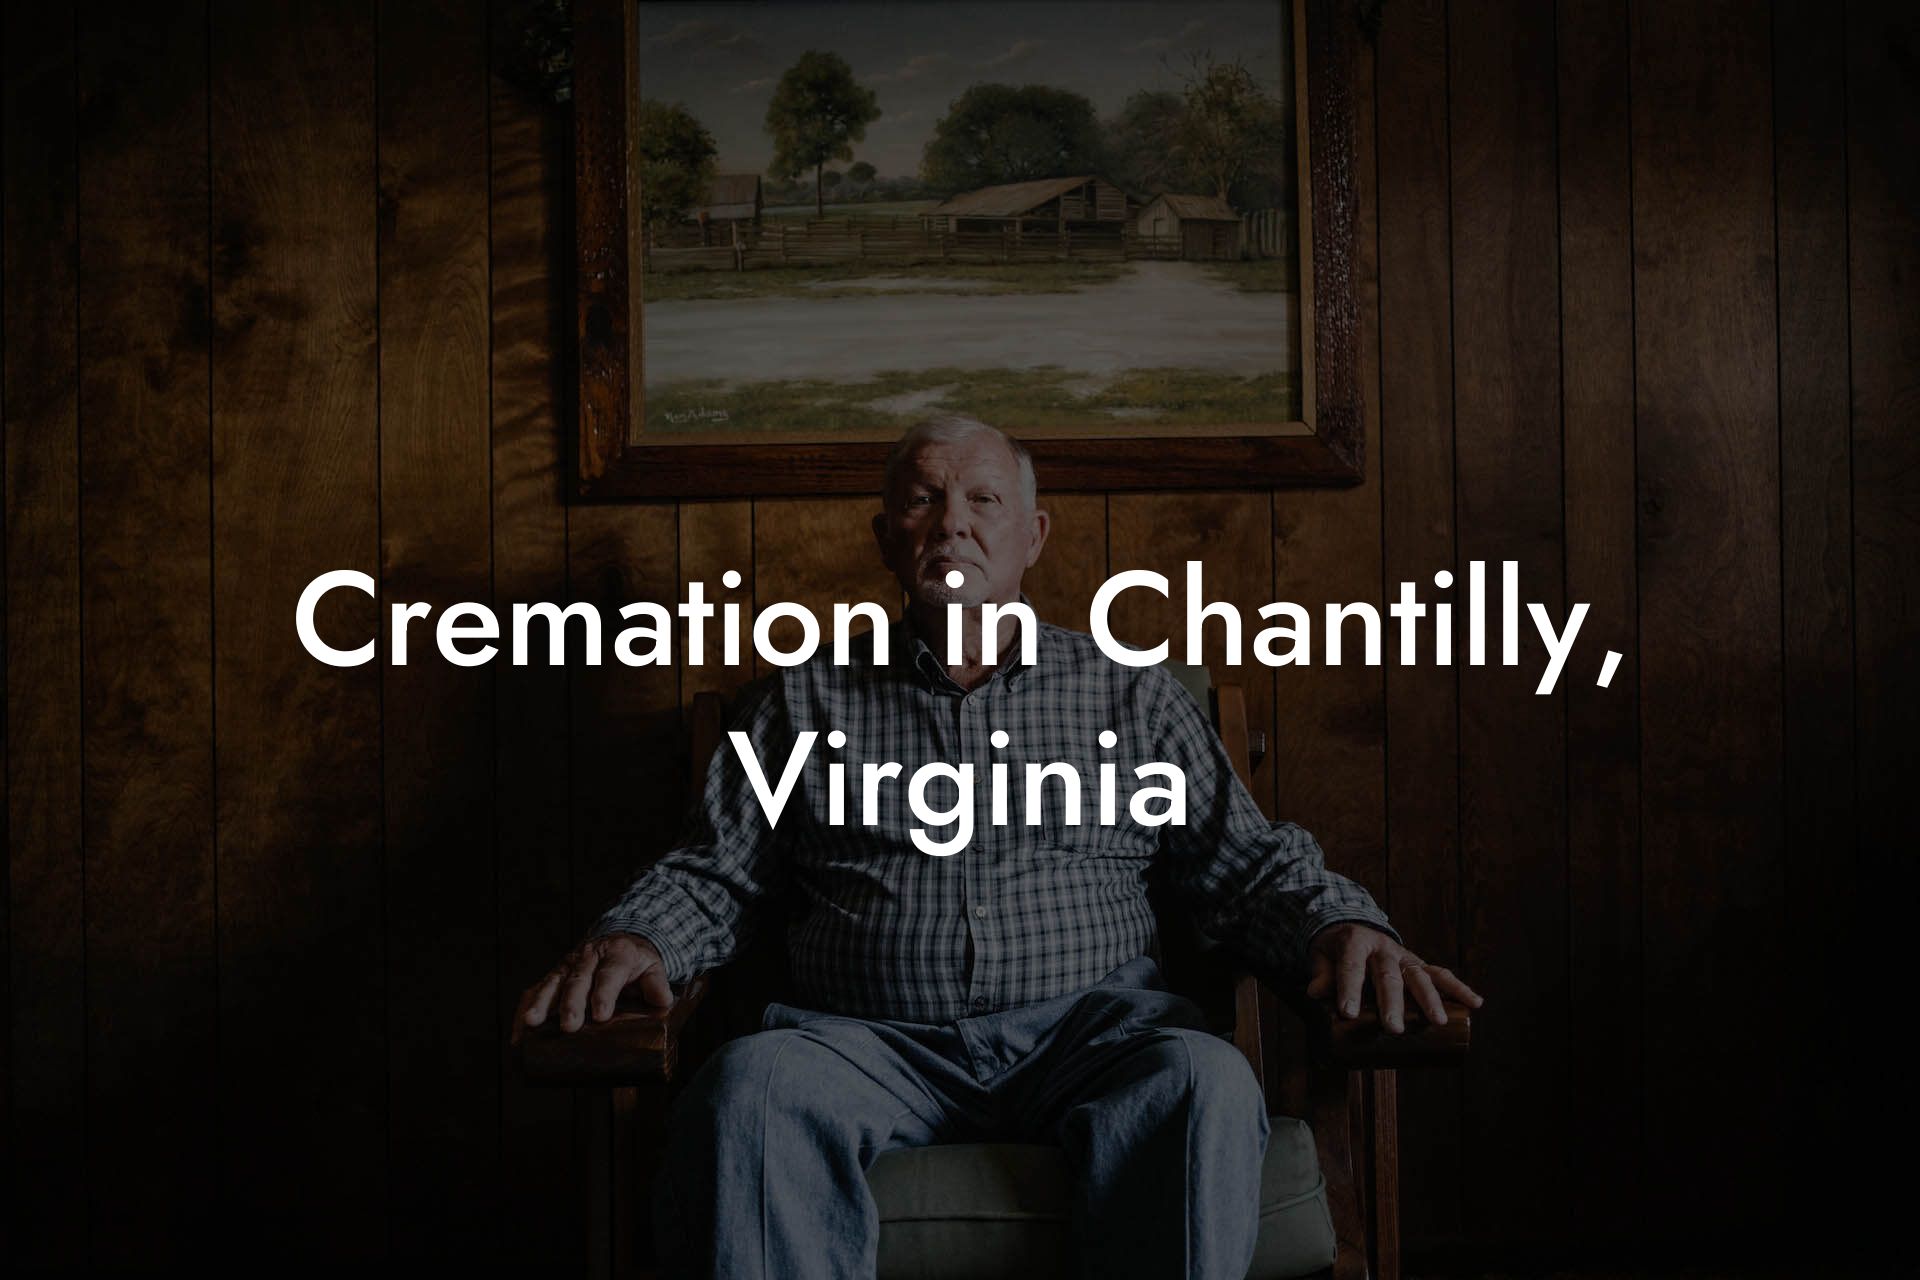 Cremation in Chantilly, Virginia